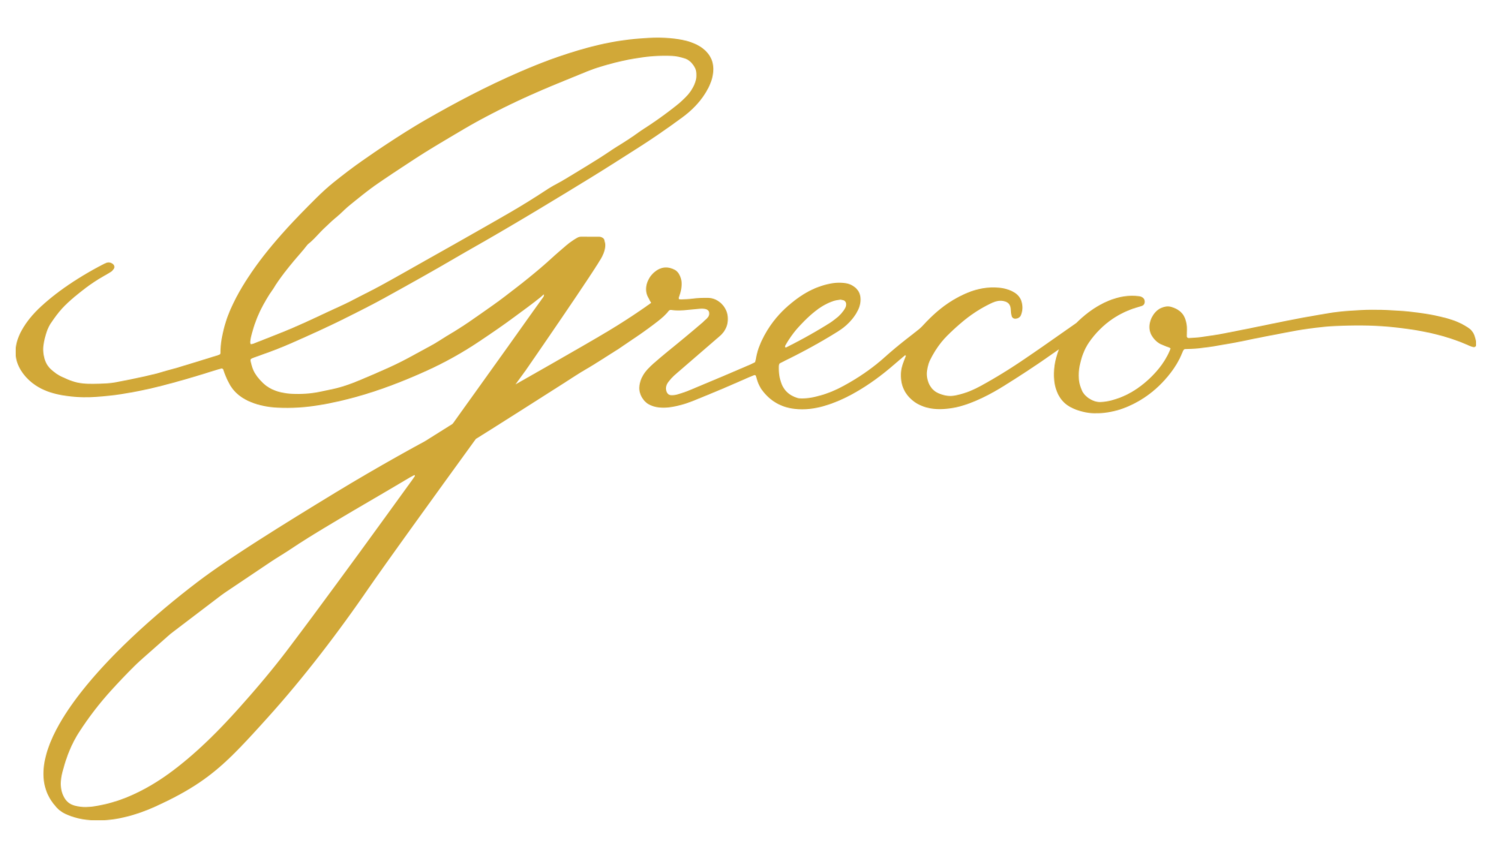 Greco Entertainment Group